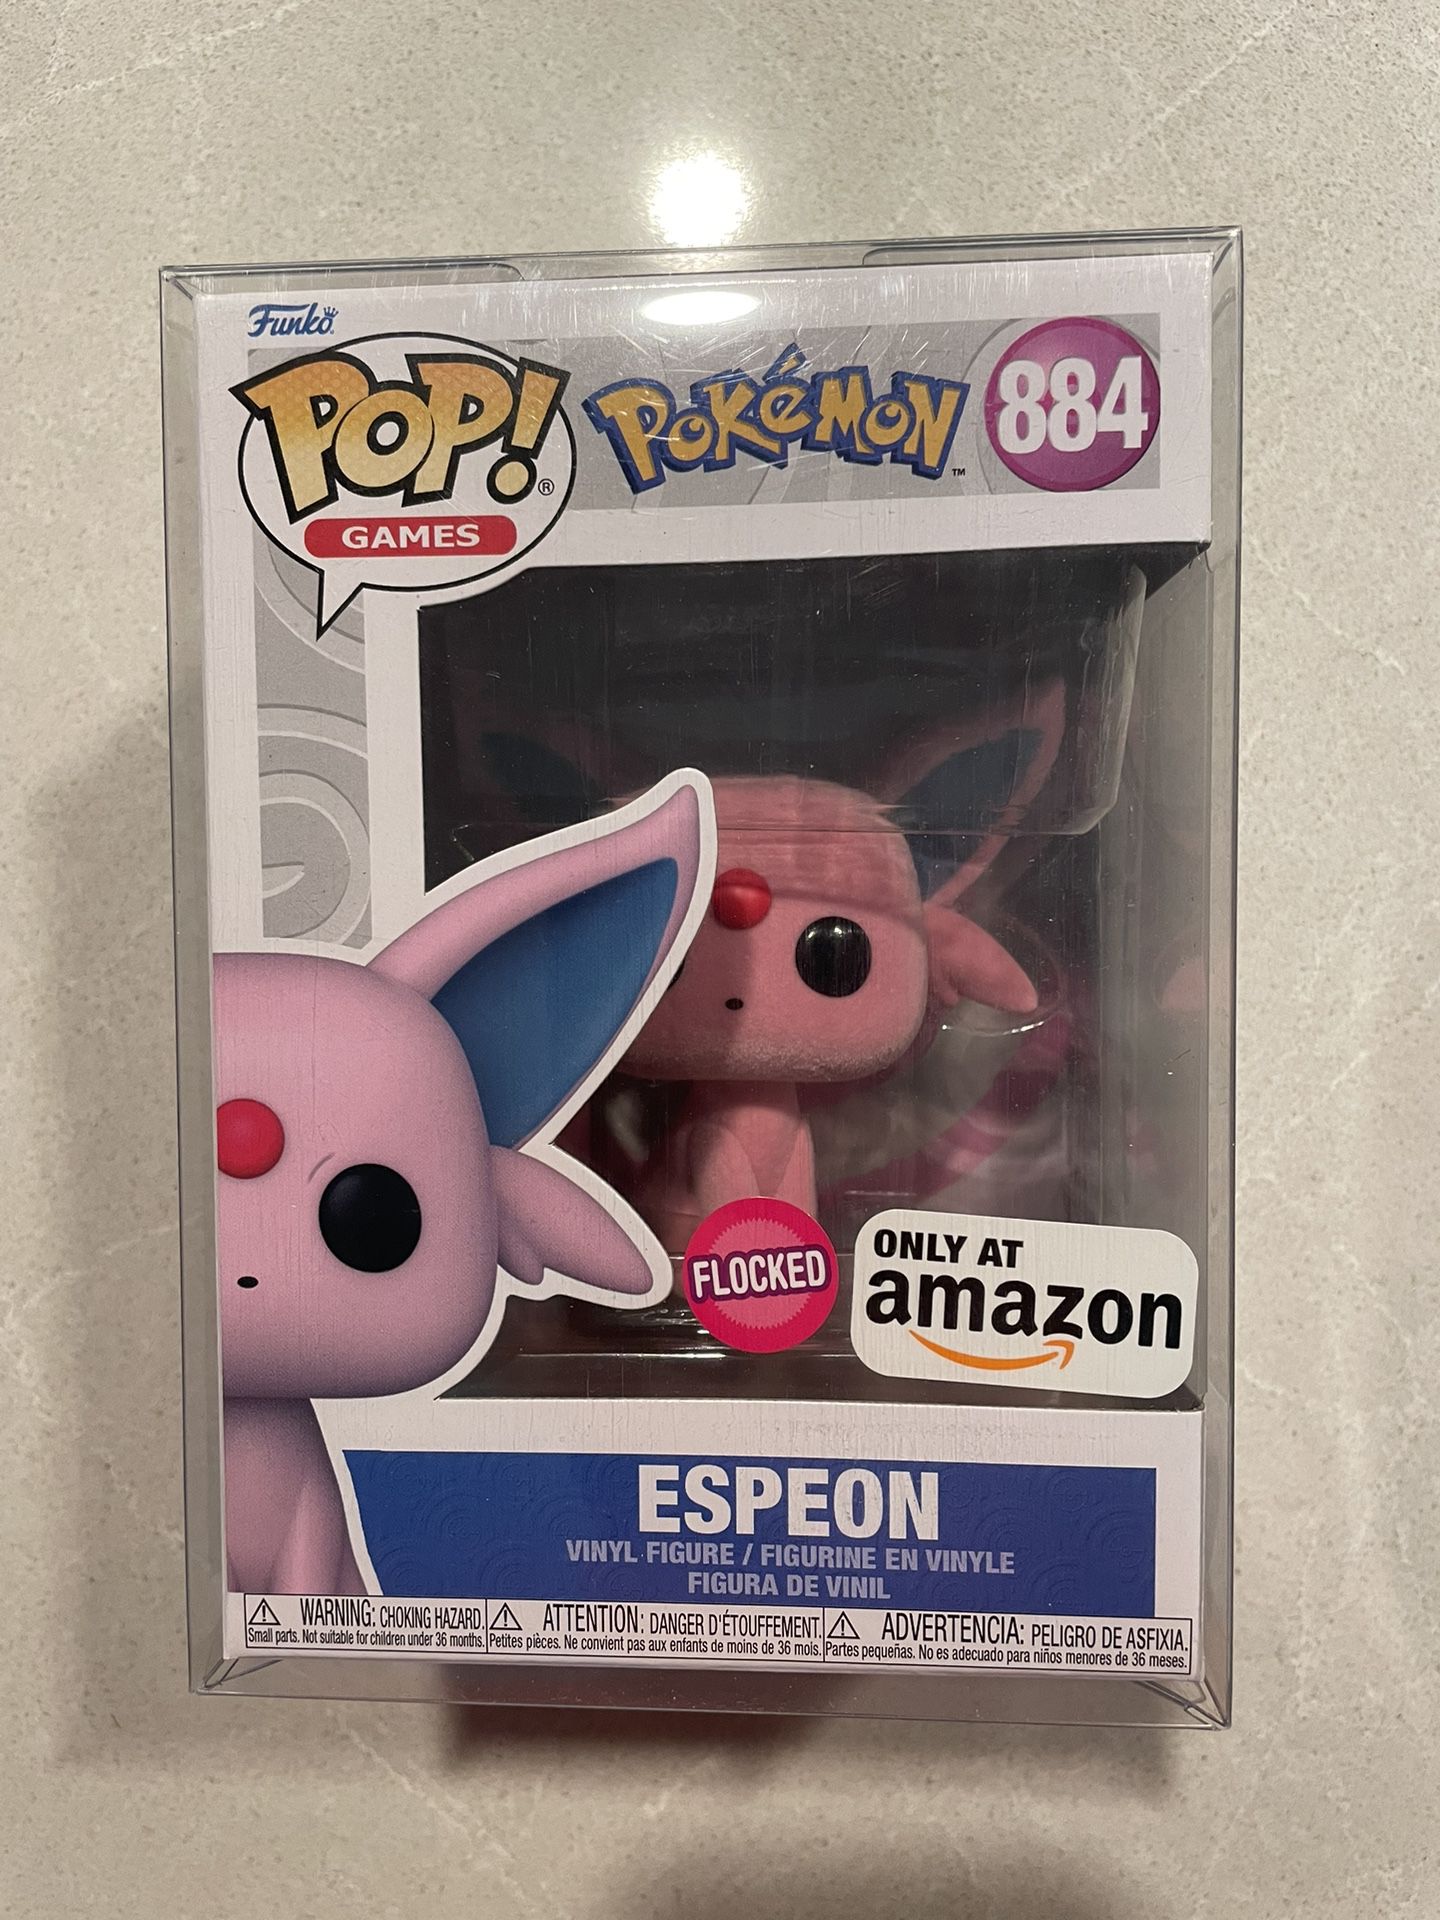 Flocked Espeon Funko Pop *MINT* Amazon Exclusive Pokemon 884 with Protector Pokémon Eevee Eeveelutions